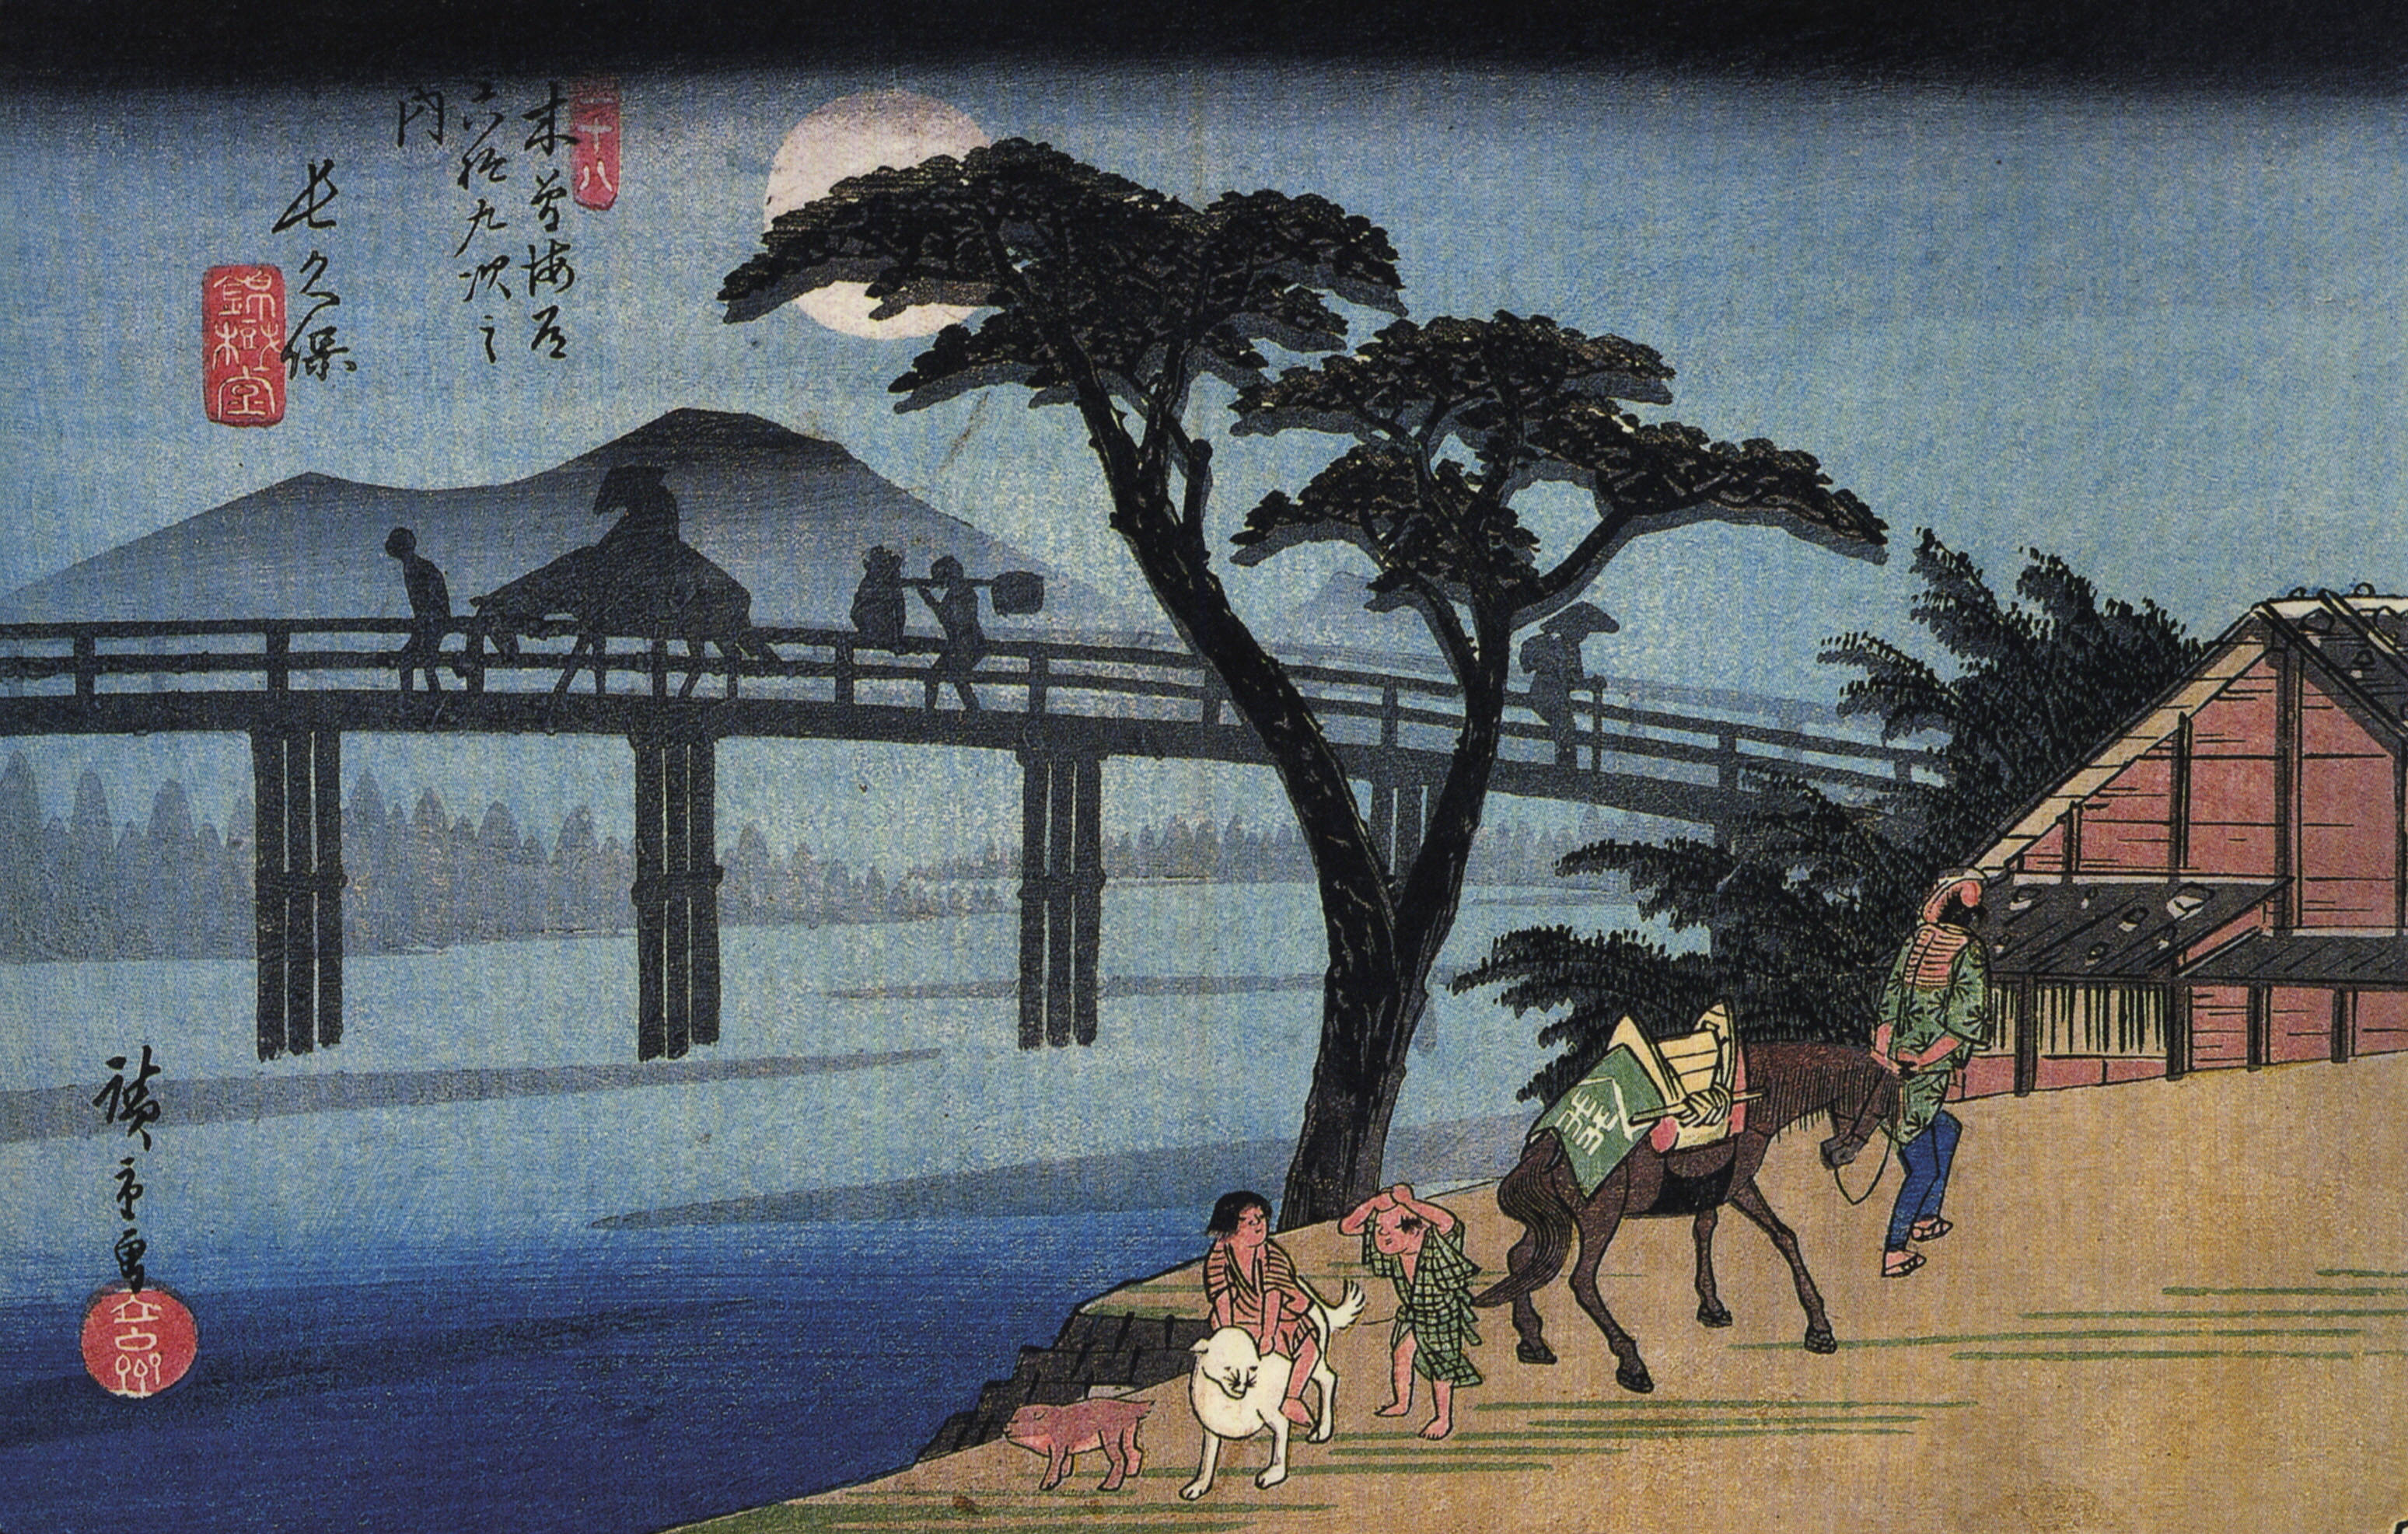 Man on Horseback Crossing a Bridge by  Hiroshige - 1834-1842 - 18.3 x 25.6 cm Library of Congress